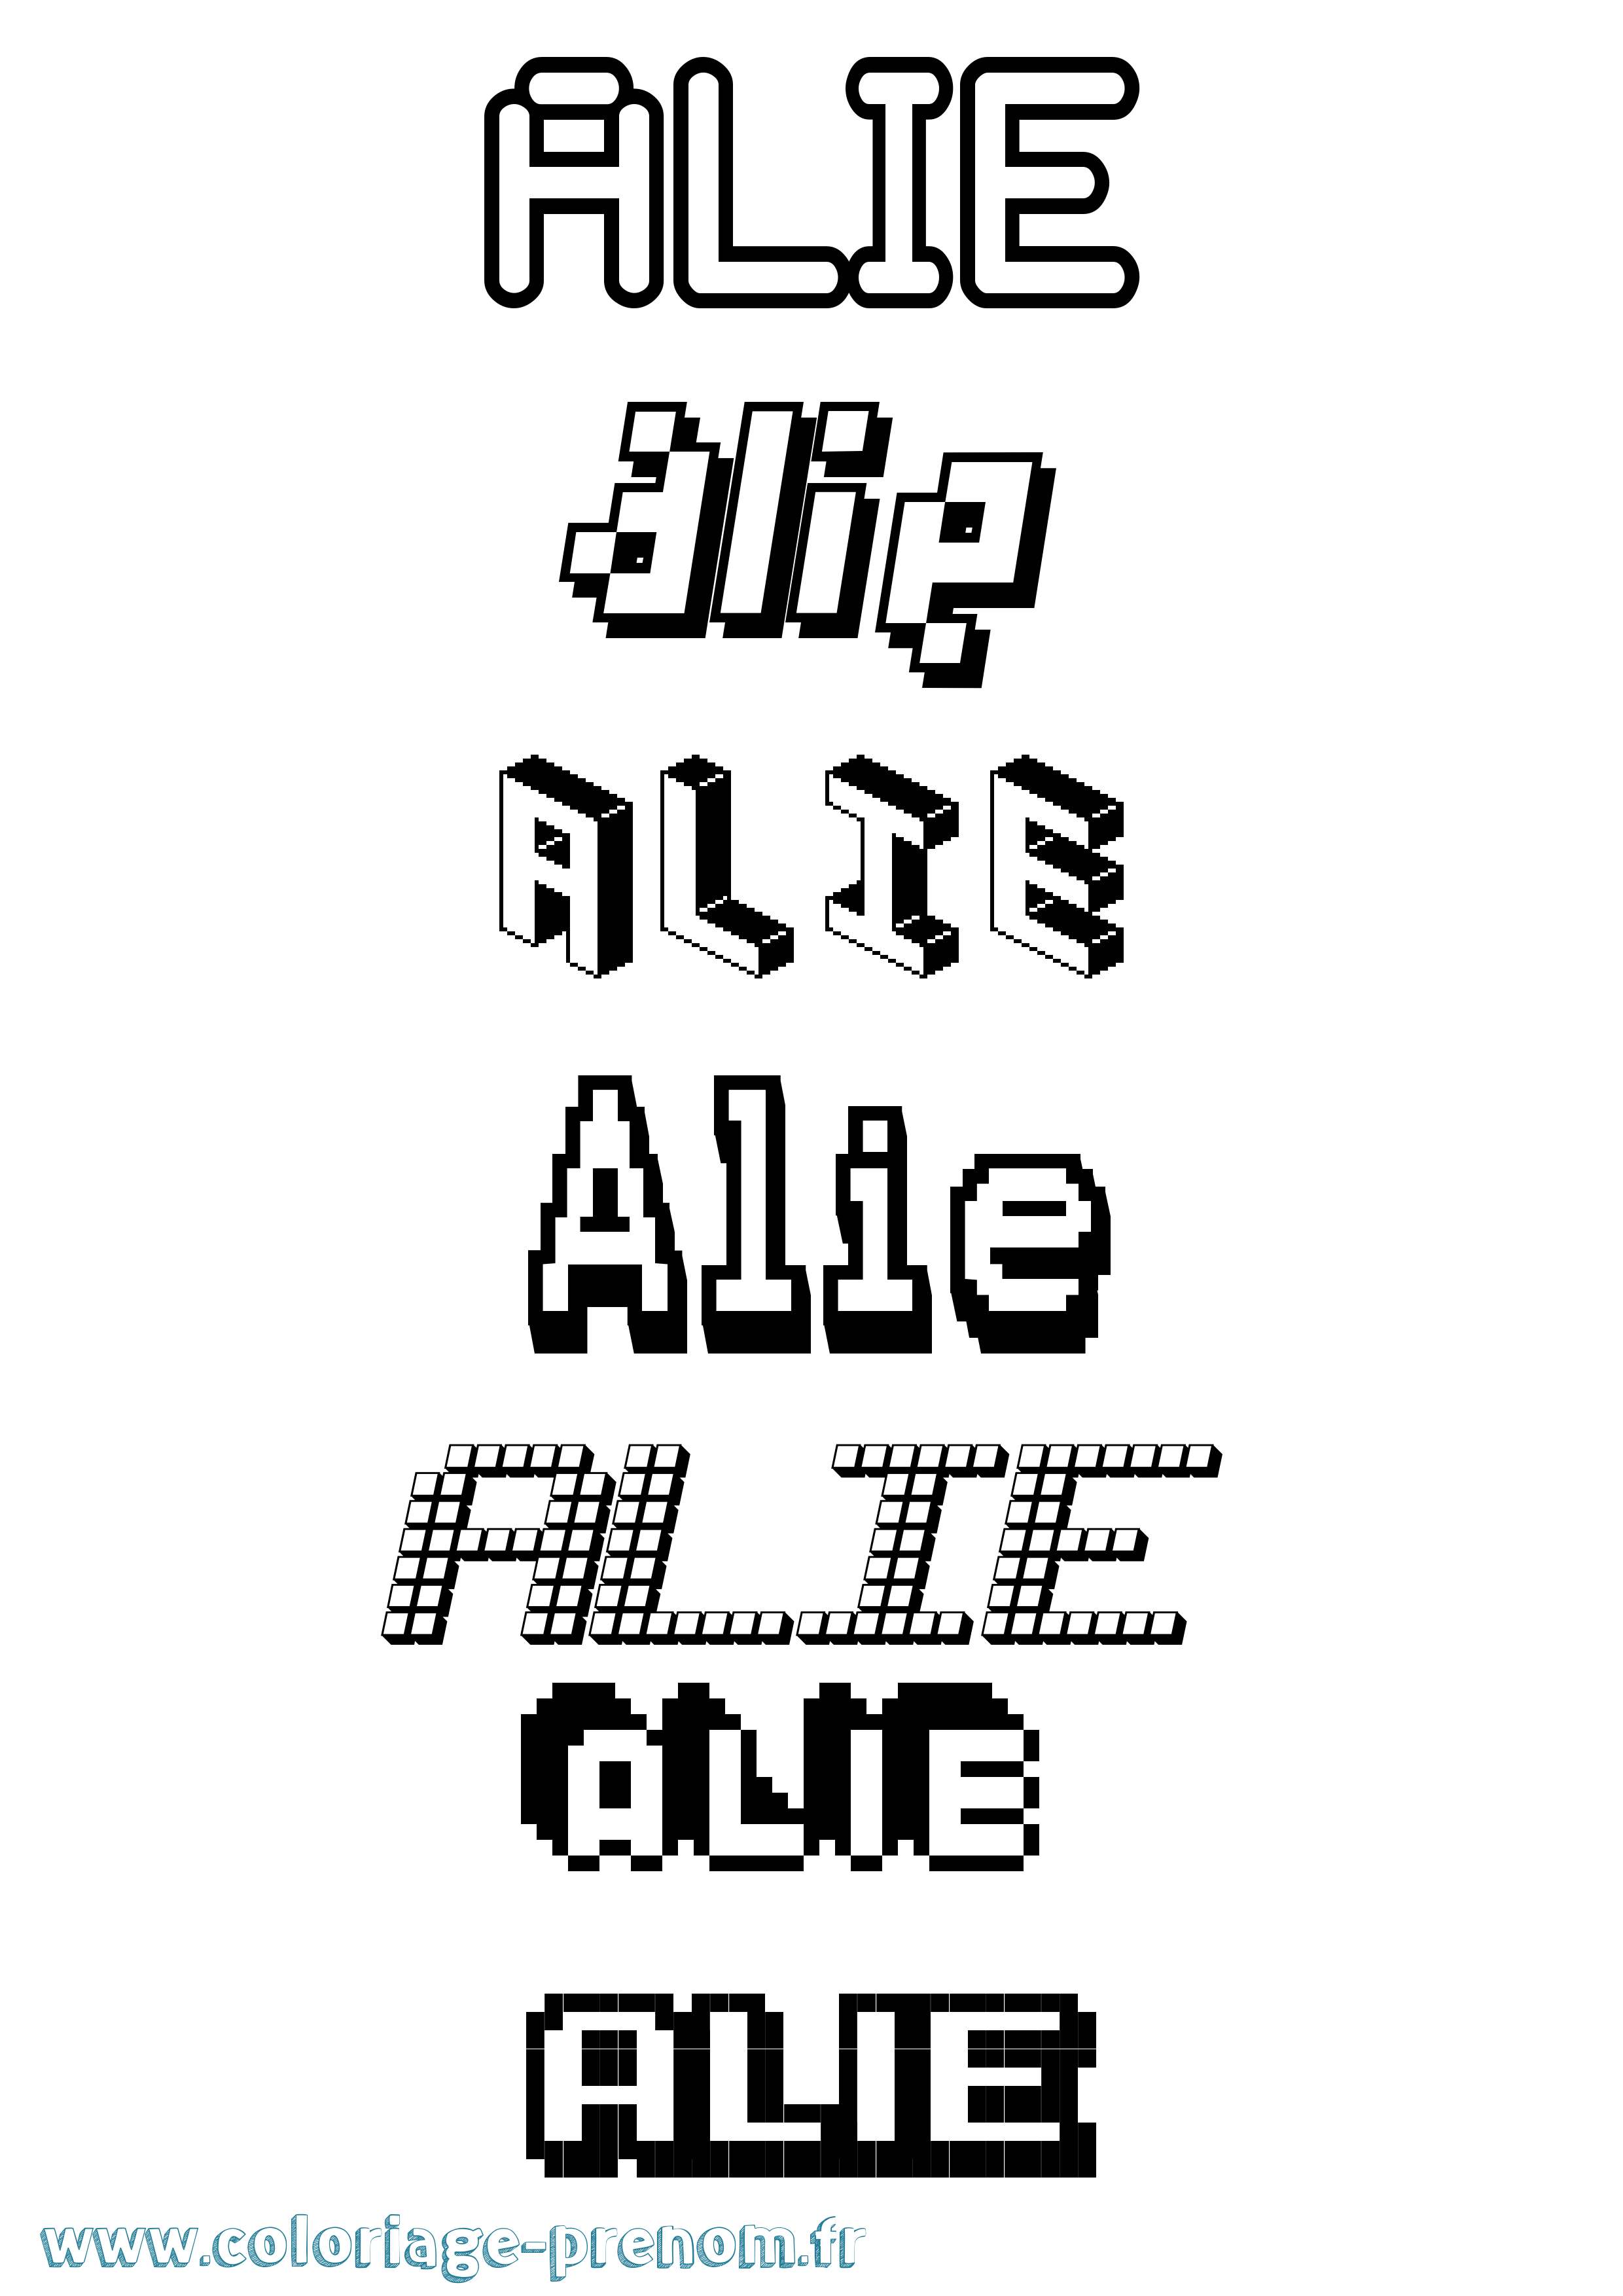 Coloriage prénom Alie Pixel